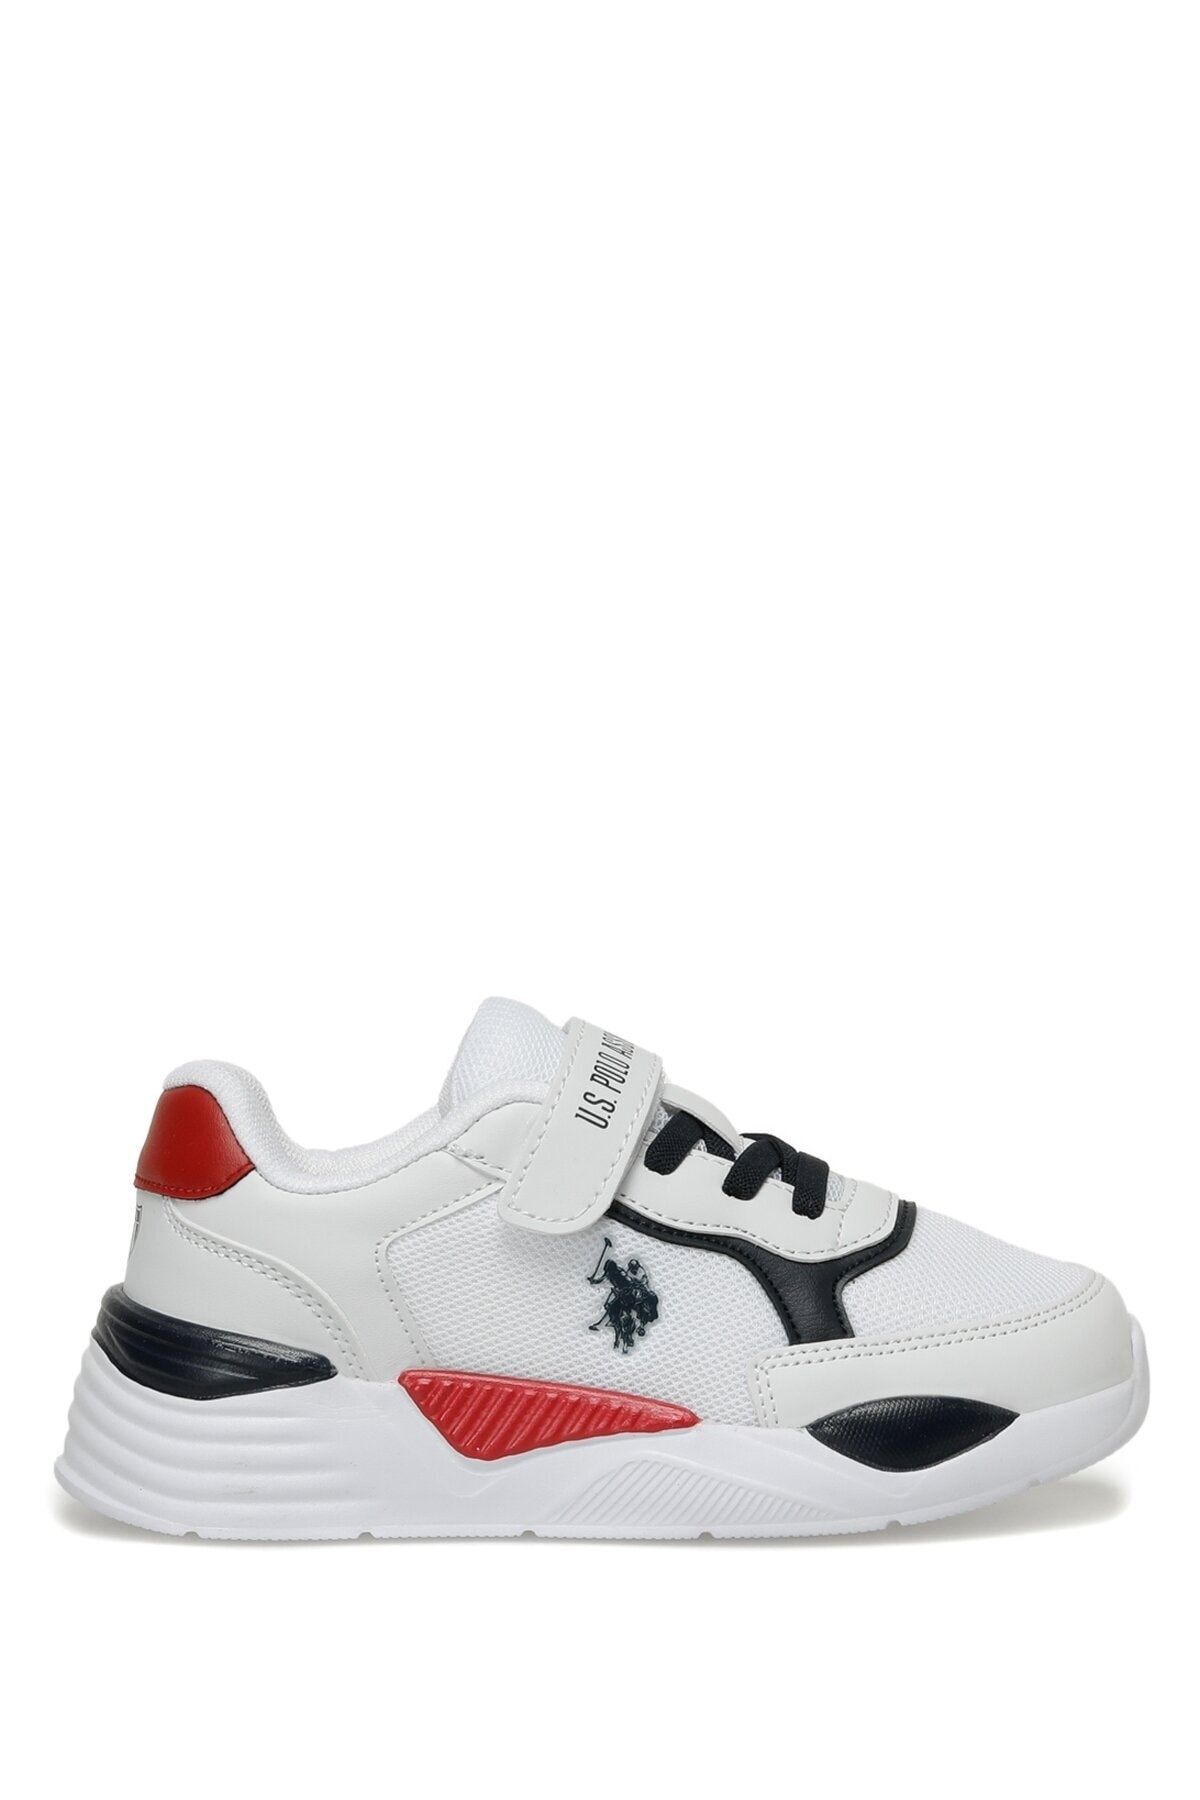 U.S. Polo Assn. Apron 3fx Beyaz Erkek Çocuk Sneaker